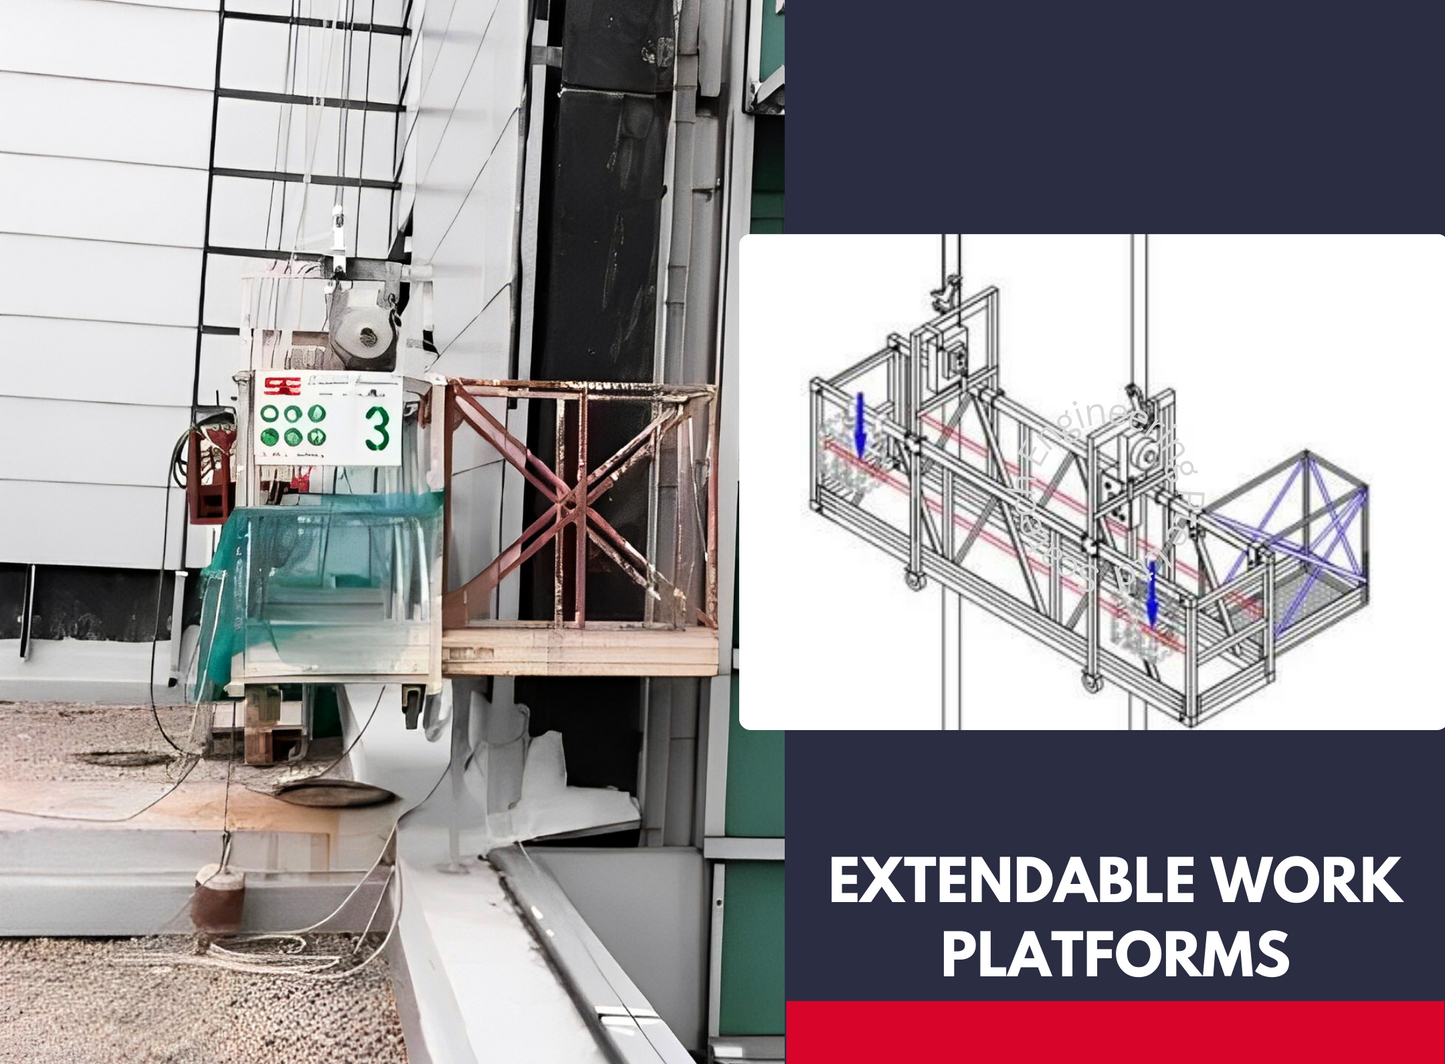 Extendable work platforms